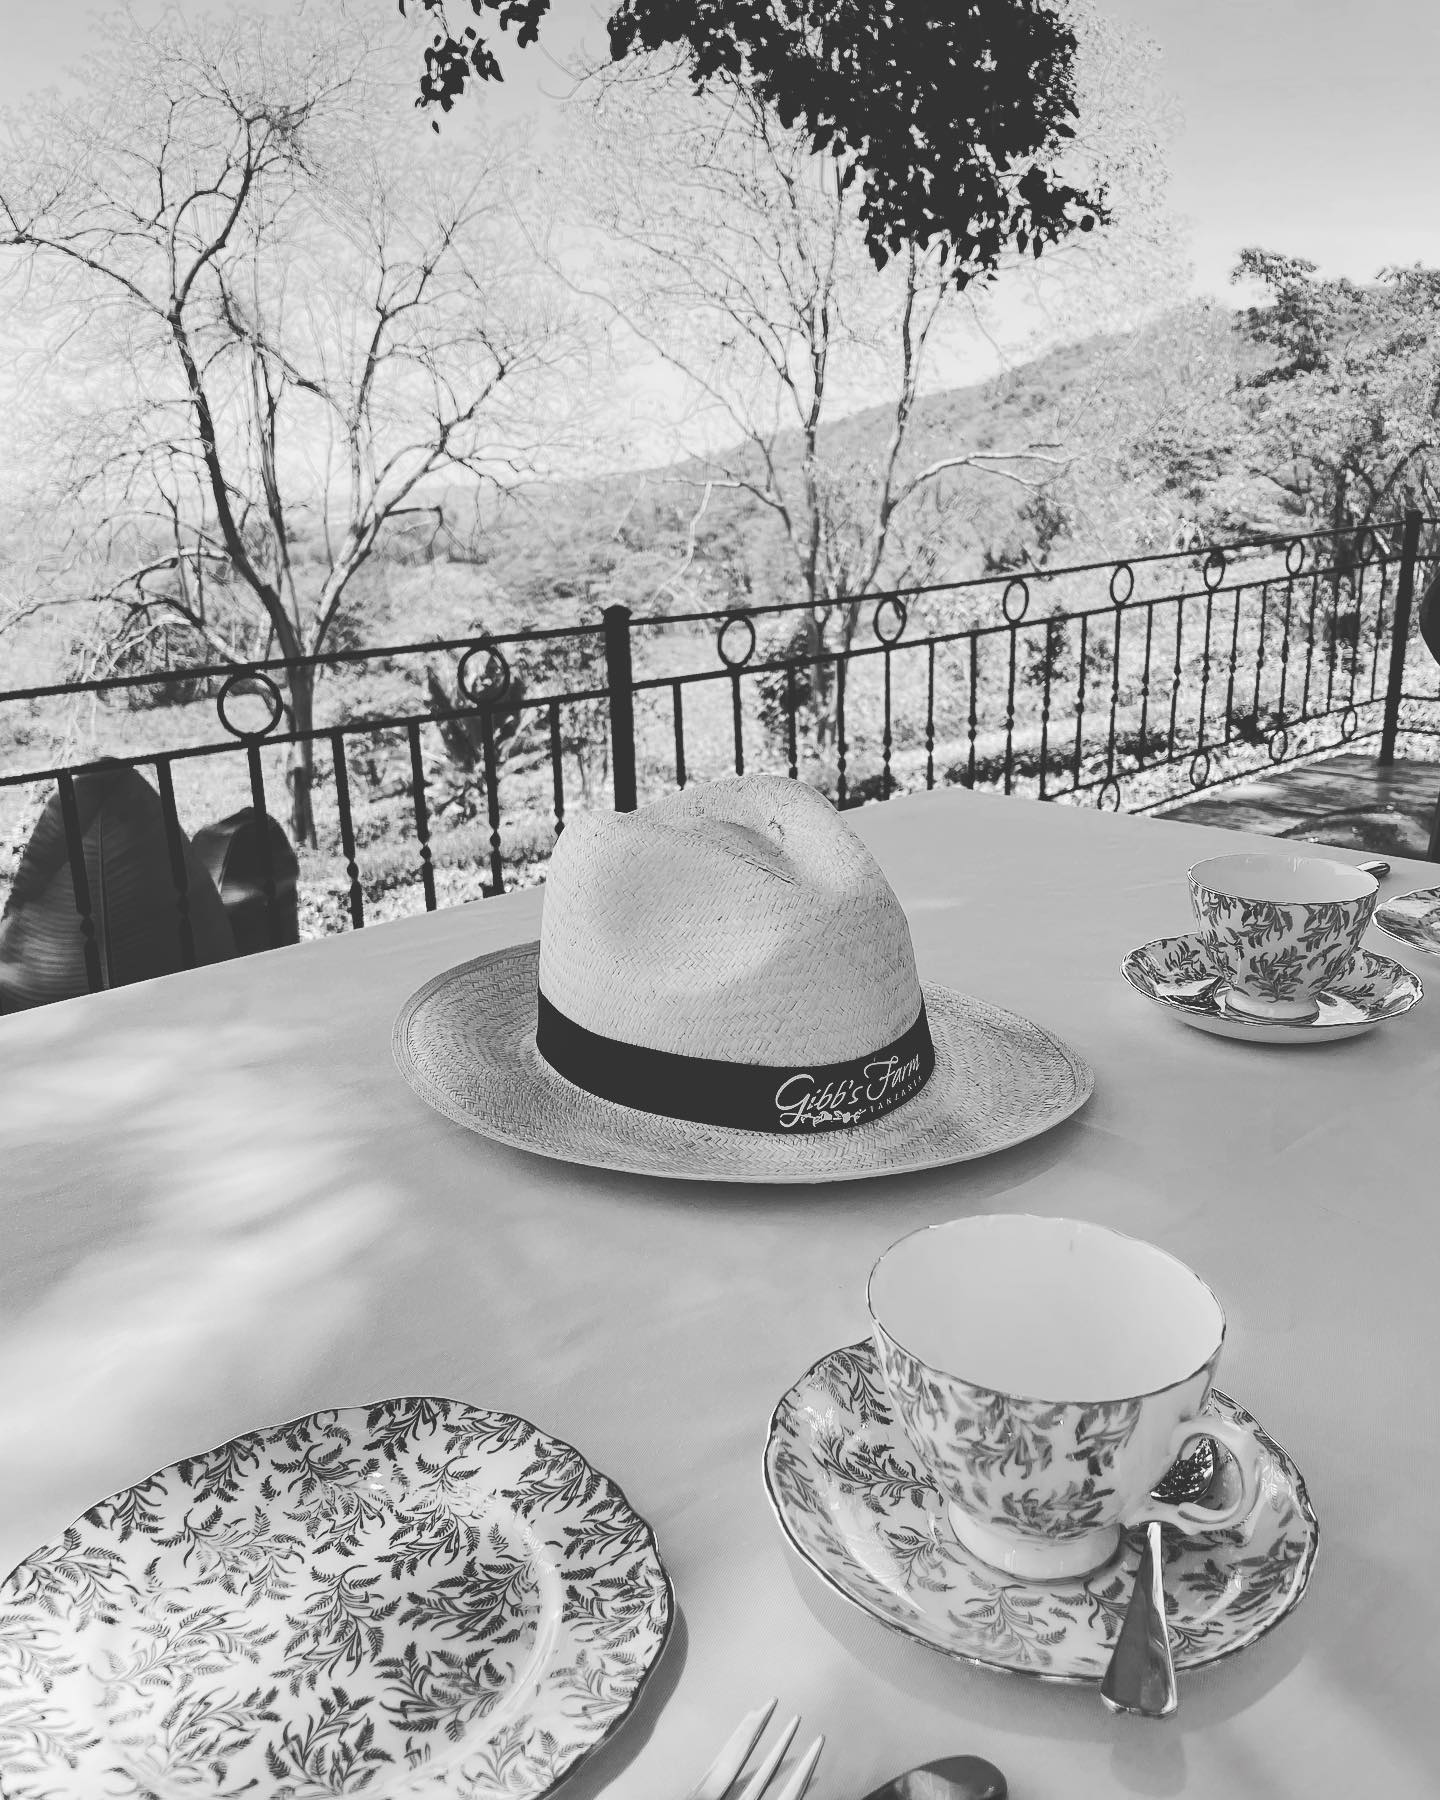 Sunny Sunday with high tea on the yoga platform with views over the coffee plantation…… #views #hightea #sunday #sundayfunday #sunnyday #sunny #tea #coffee #viewsfordays #lazyday #lazy #design #interiordesign #panama #hat #panamahat